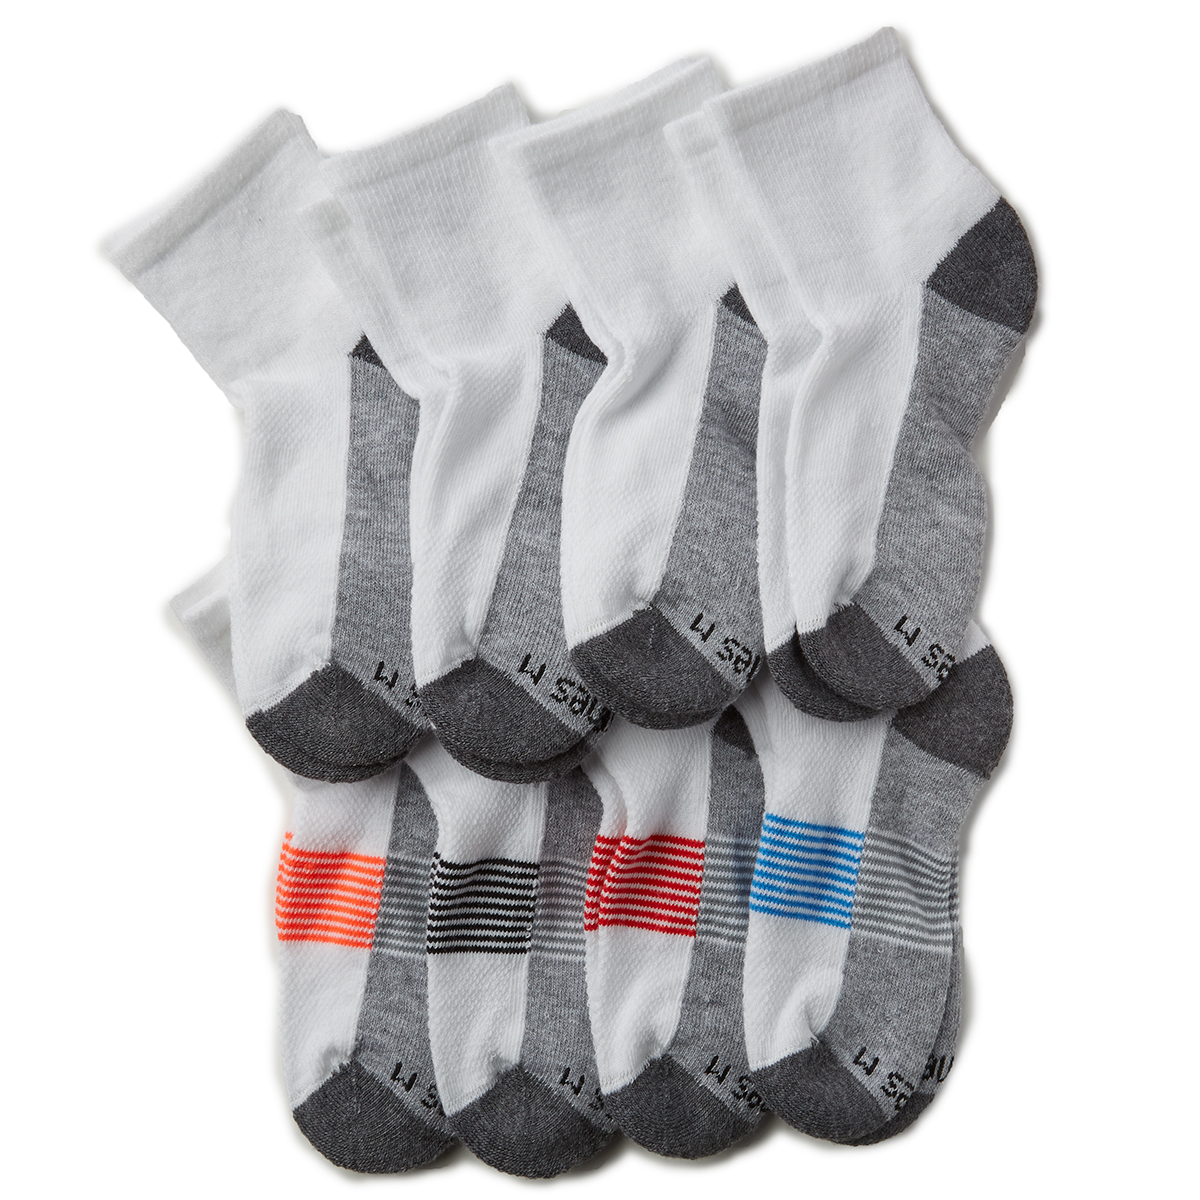 Hanes Big Boys' Ankle Socks, 8-Pack - White, L